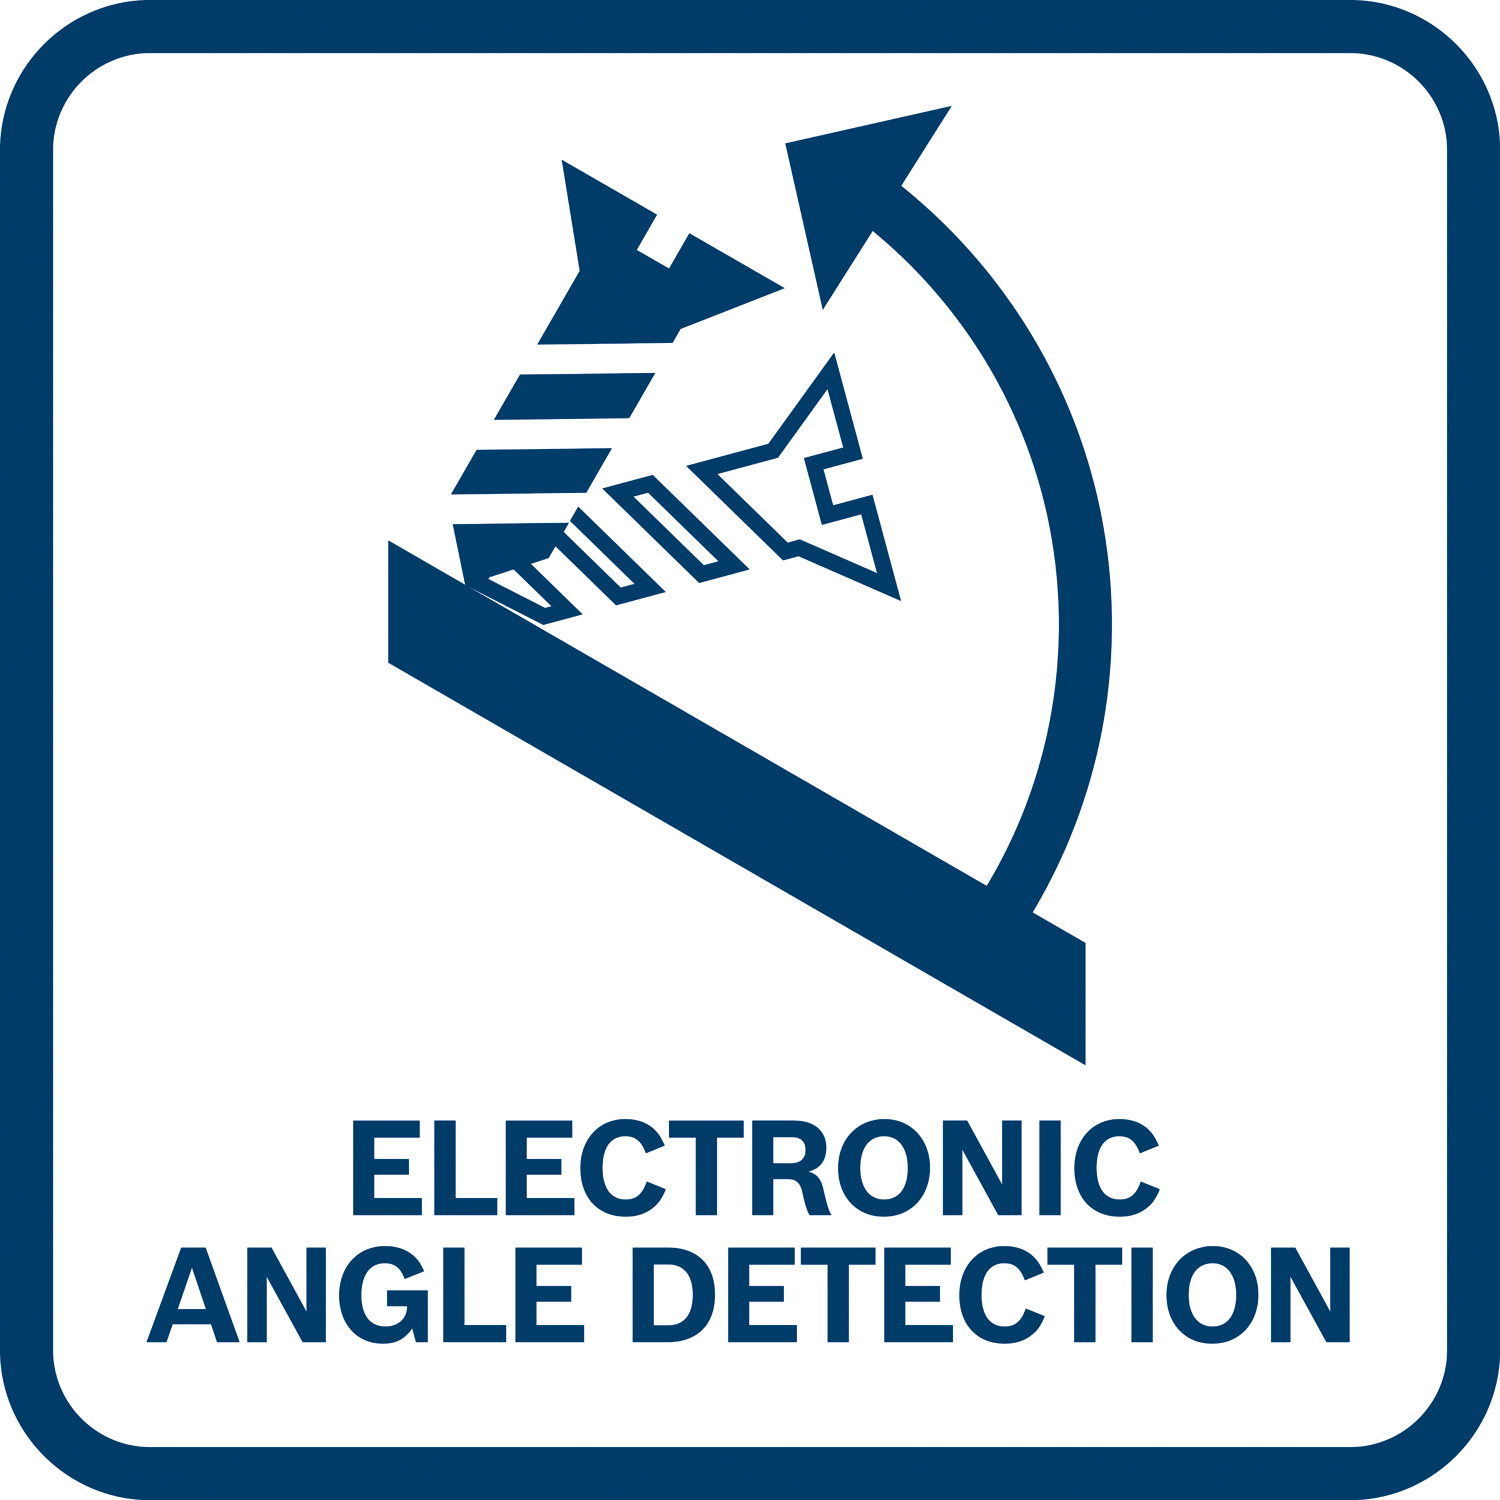 EAD - Electronic Angle Detection